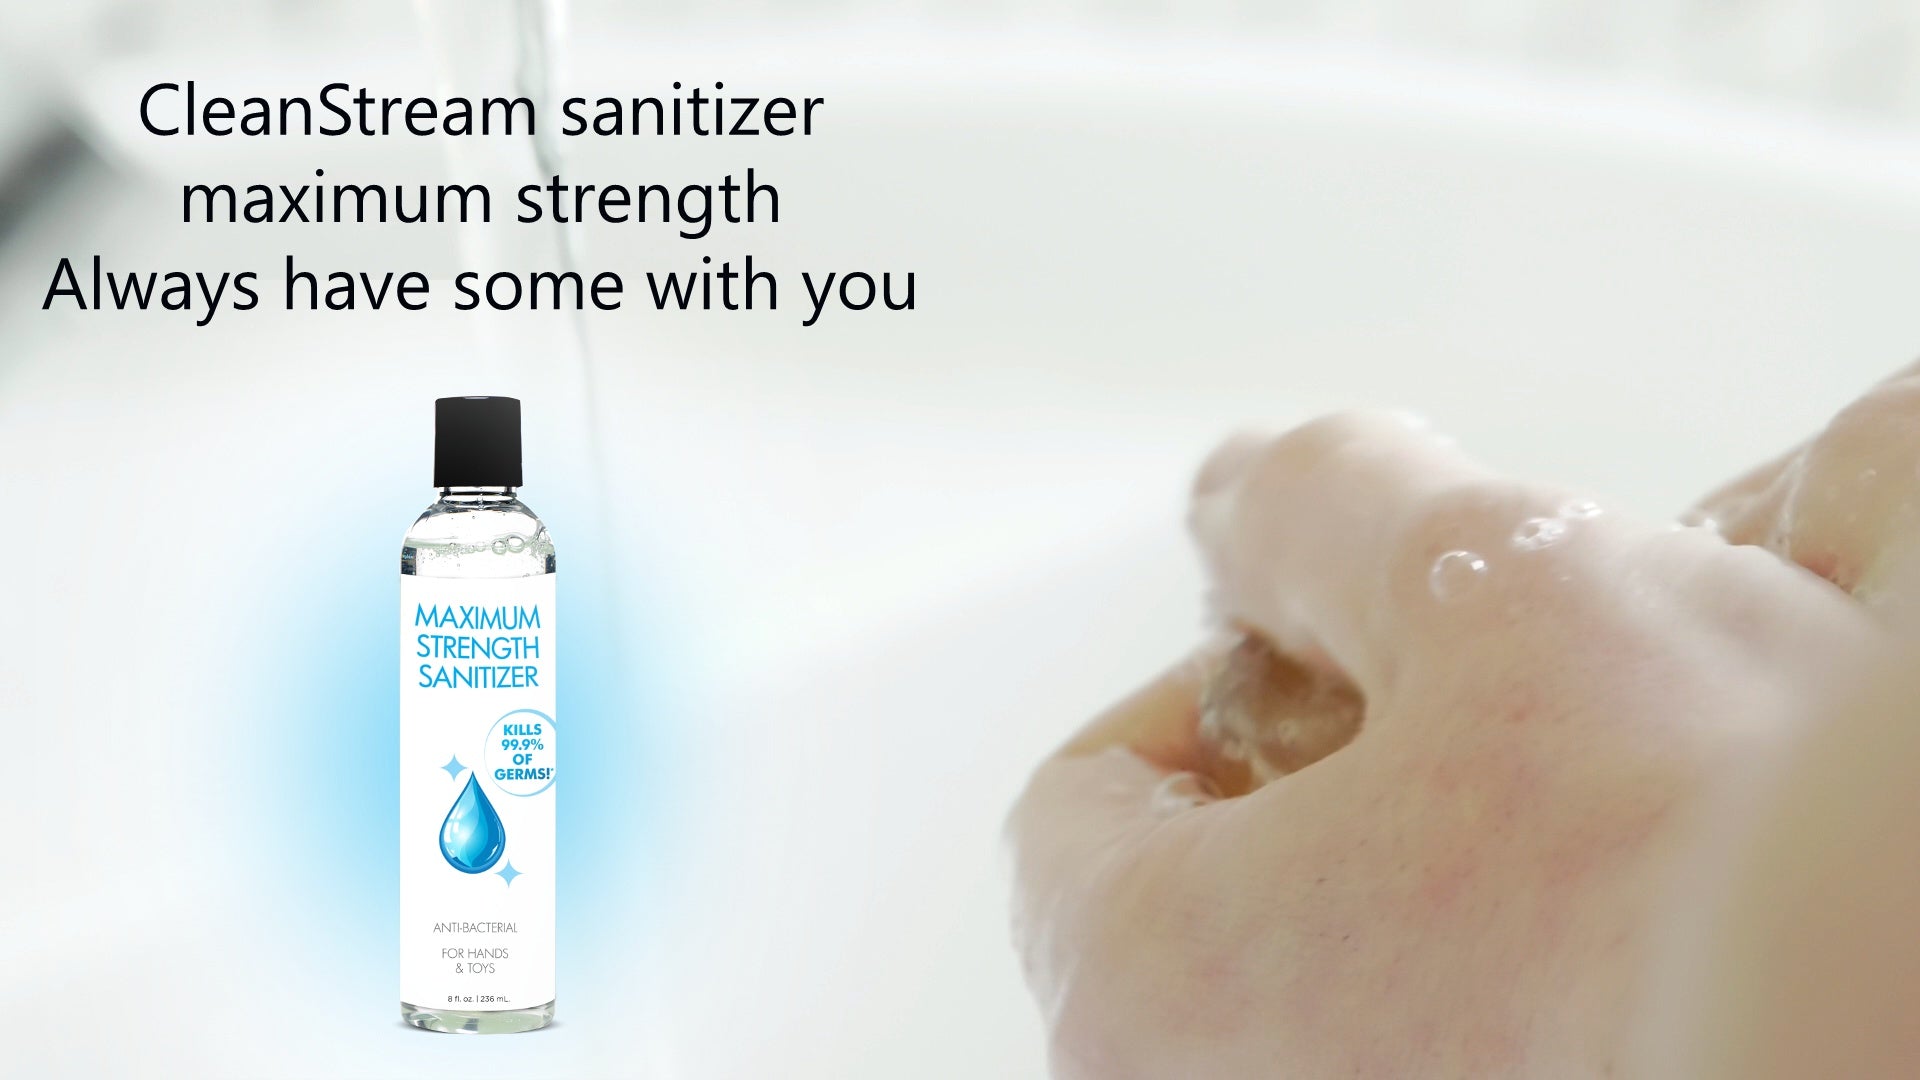 Anti-Bacterial Maximum Strength Hand Sanitizer 8oz 4-Pack - UABDSM